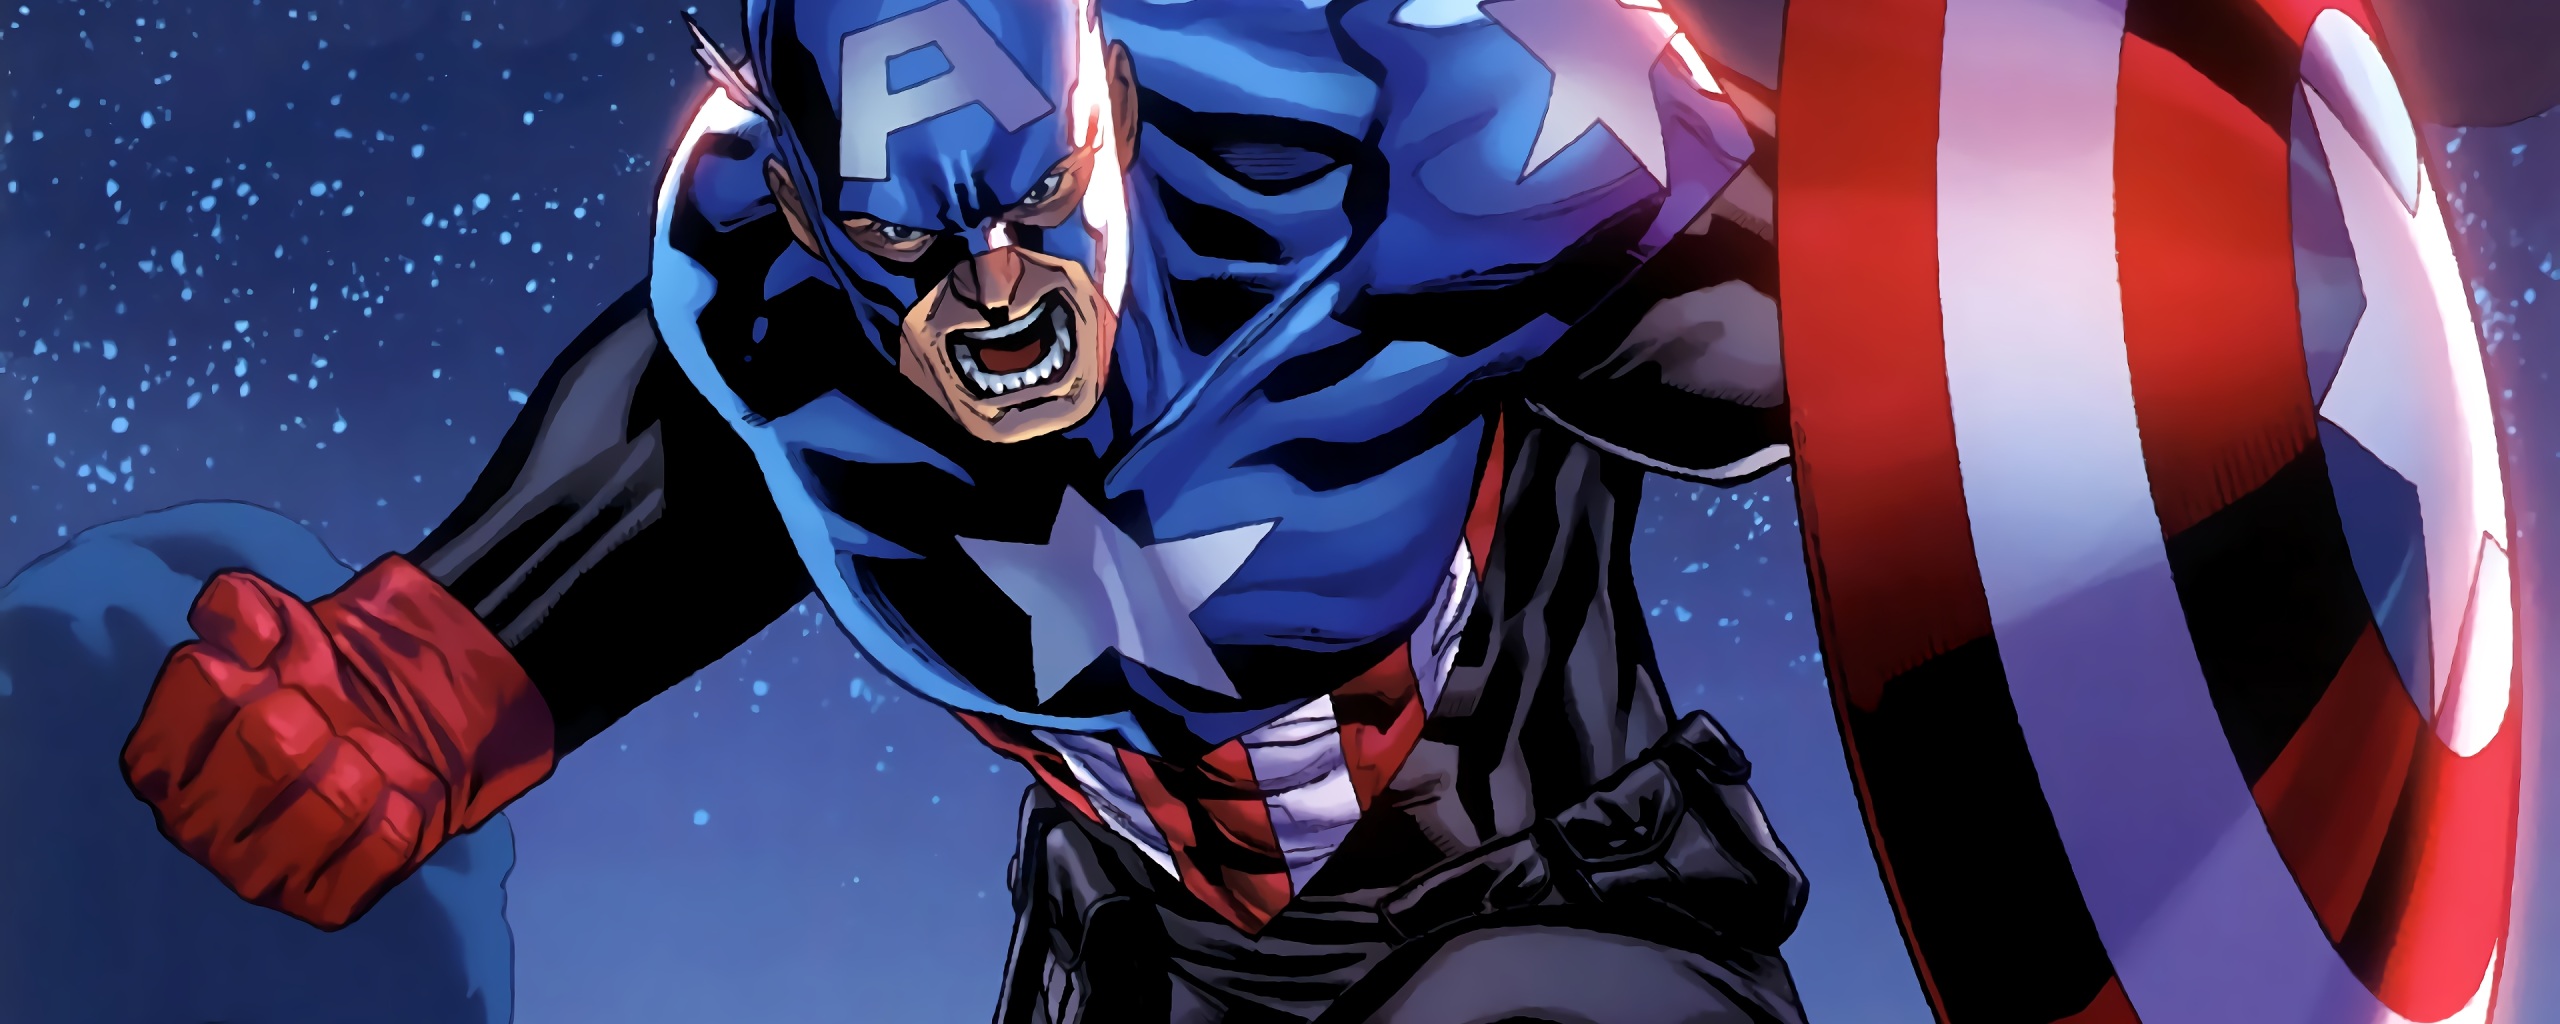 Captain America Marvel Comics 4K Wallpaper Wallpaper 4K